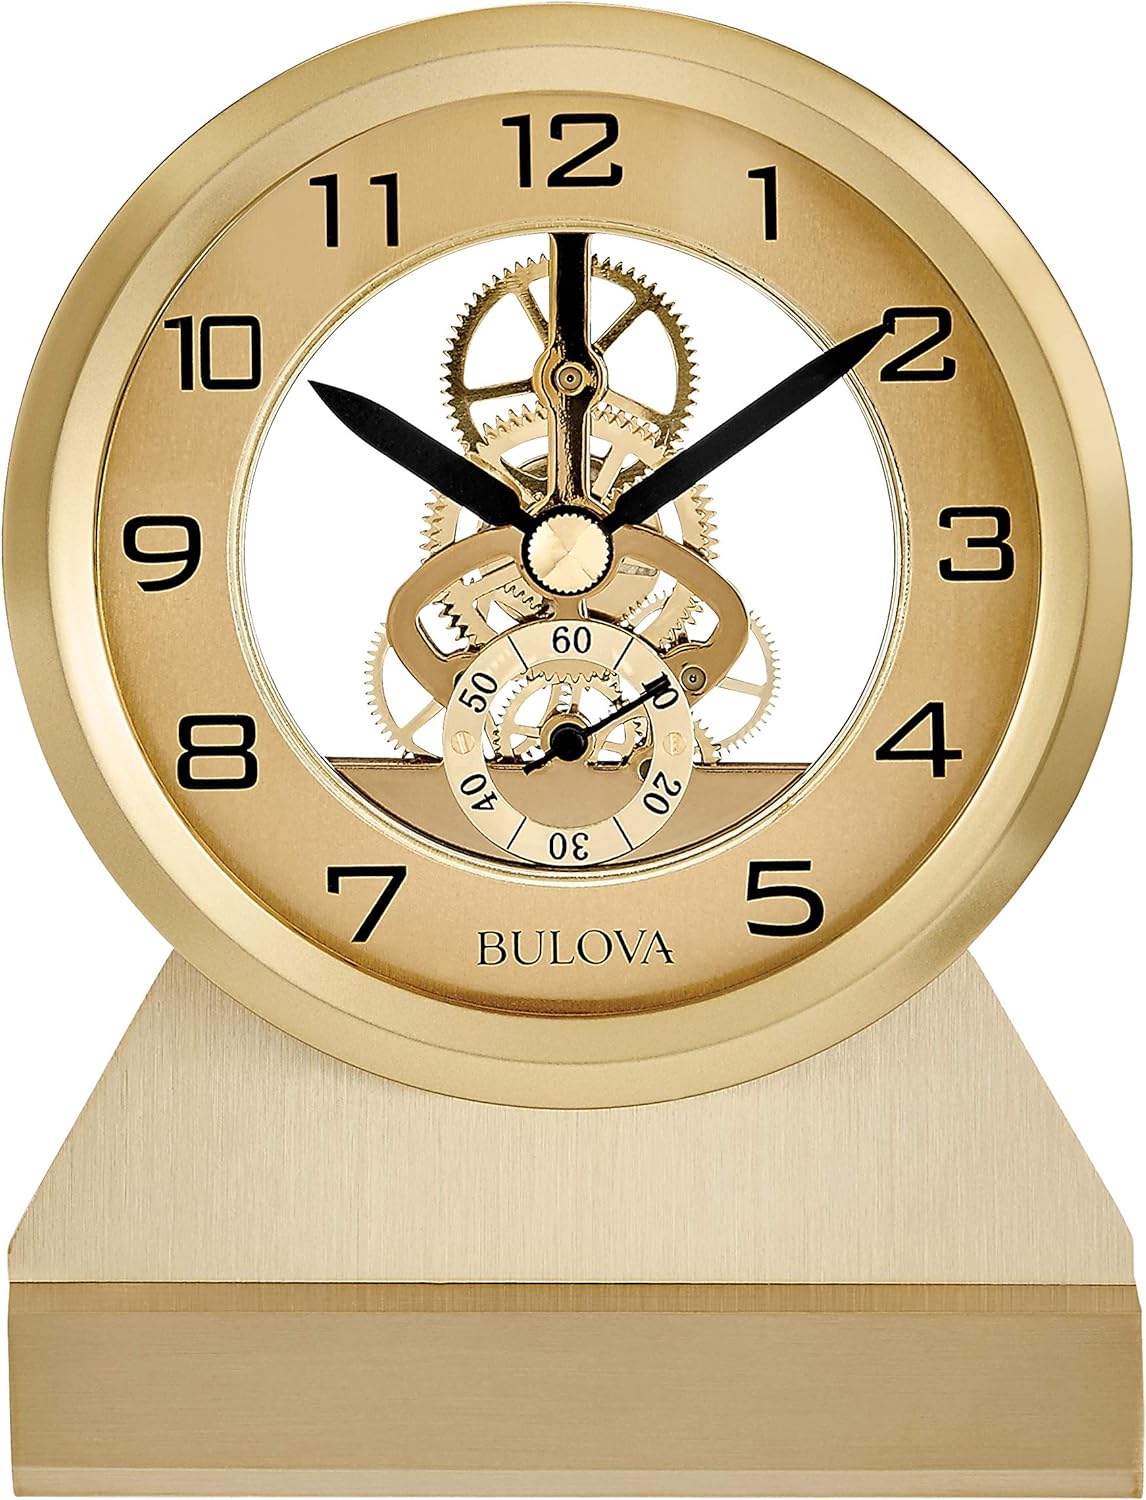 Bulova B1710 The Golden Eye Brass Skeleton Tabletop Clock